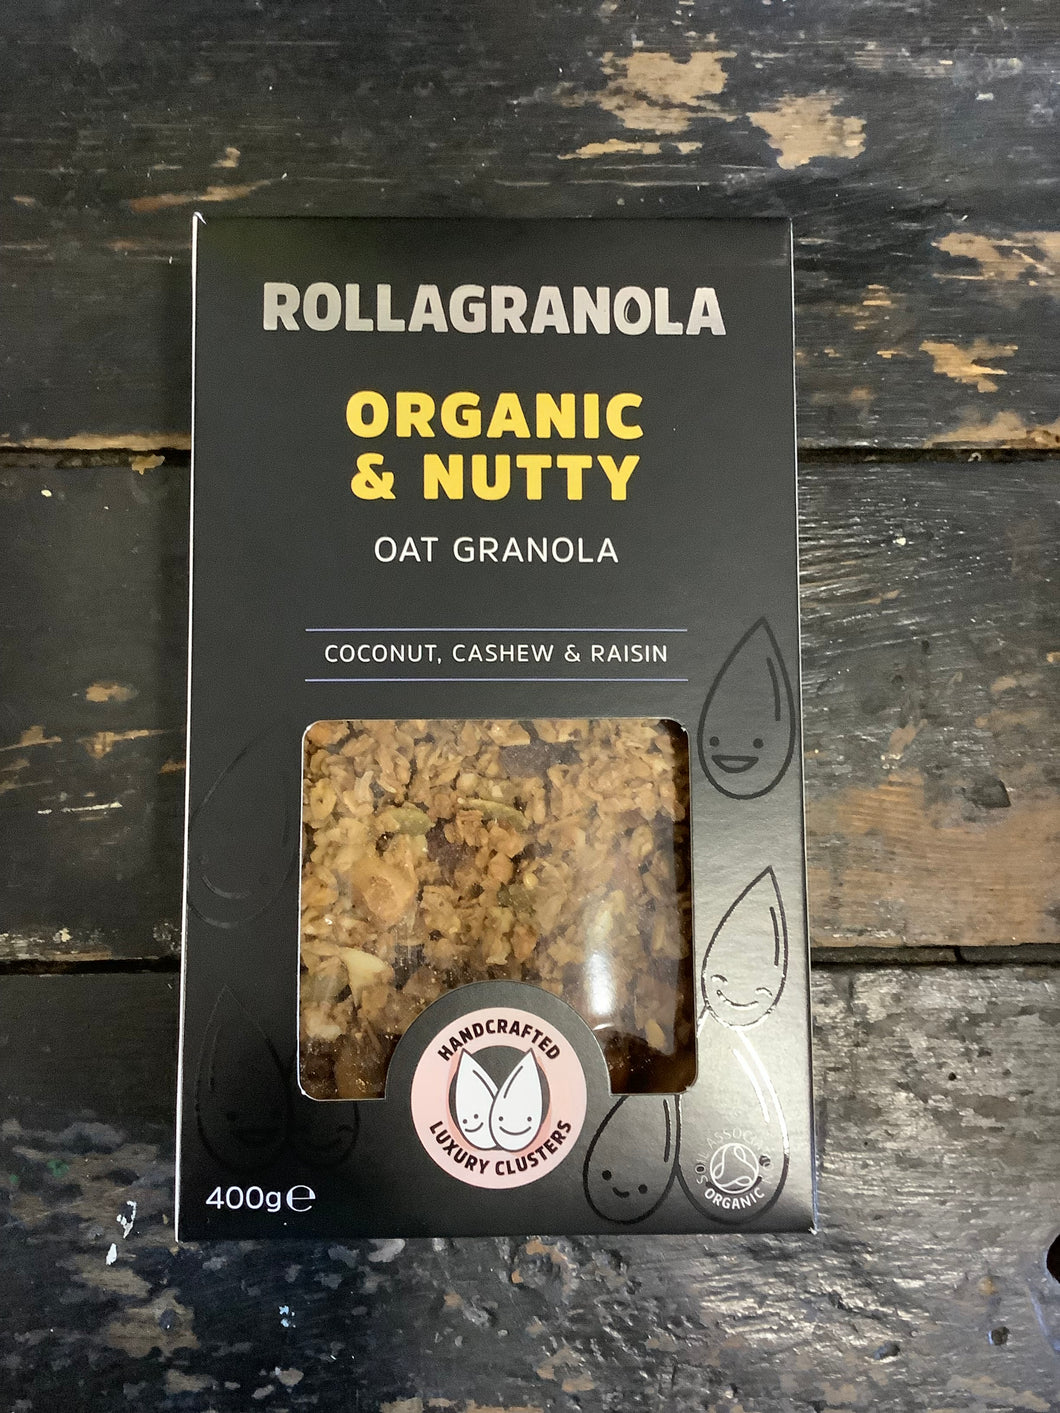 Rollagranola Organic & Nutty Oat Granola